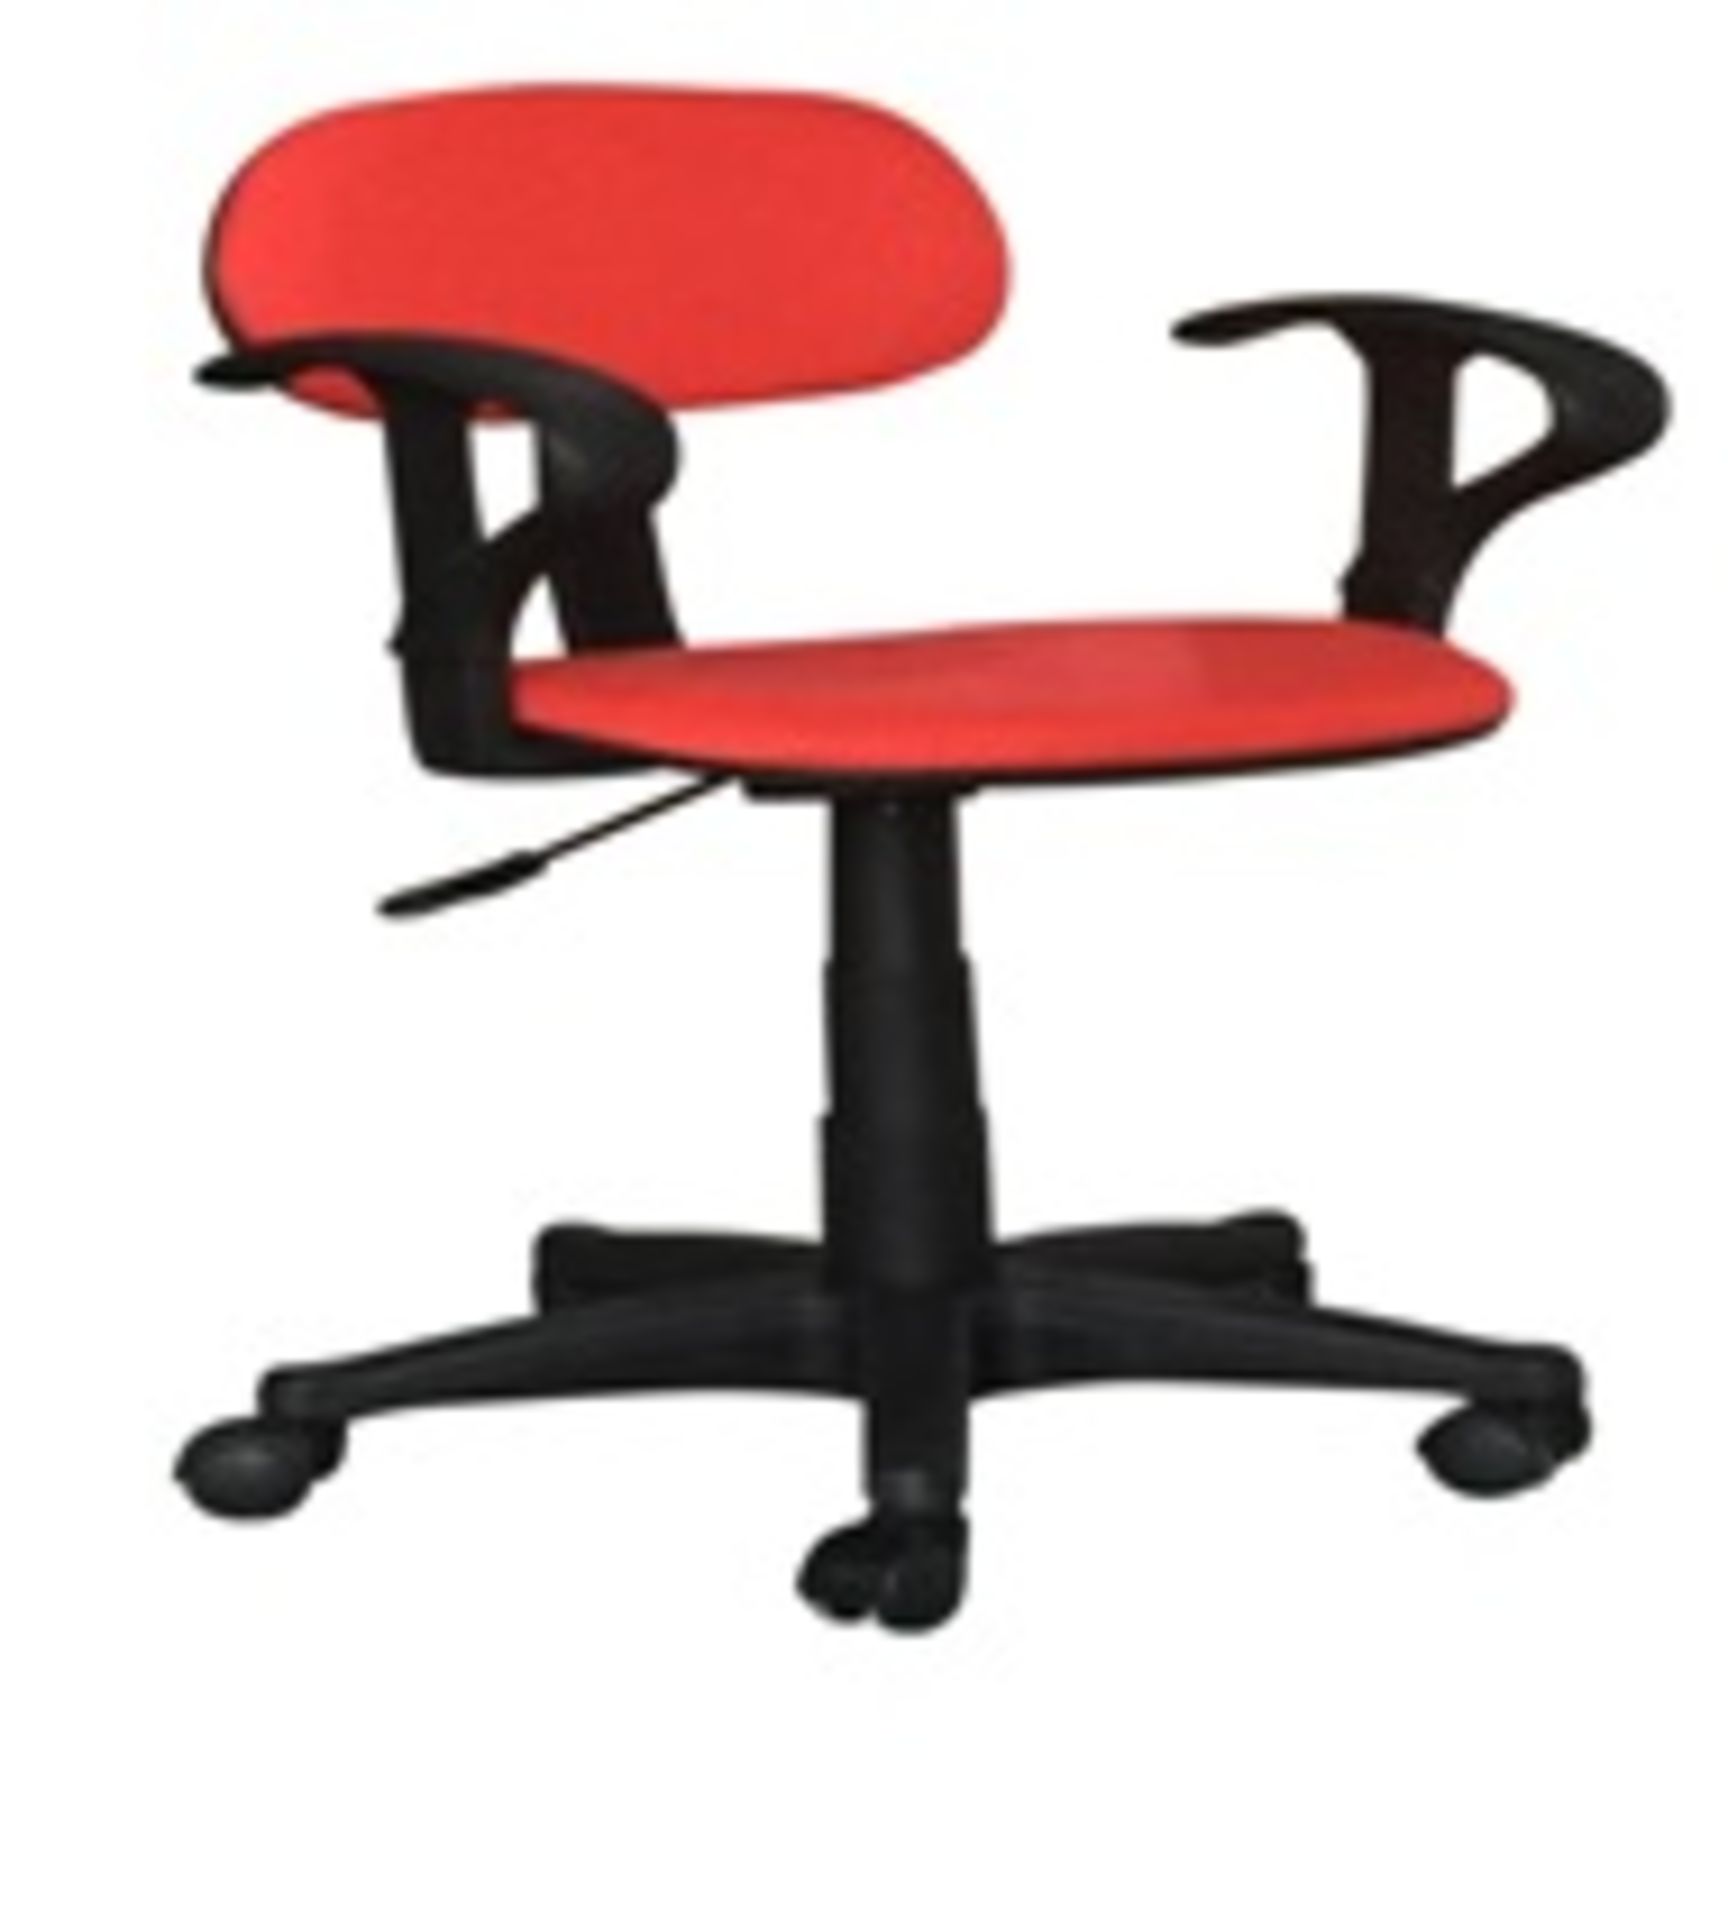 1 x Red Operators Chair (Brand New)